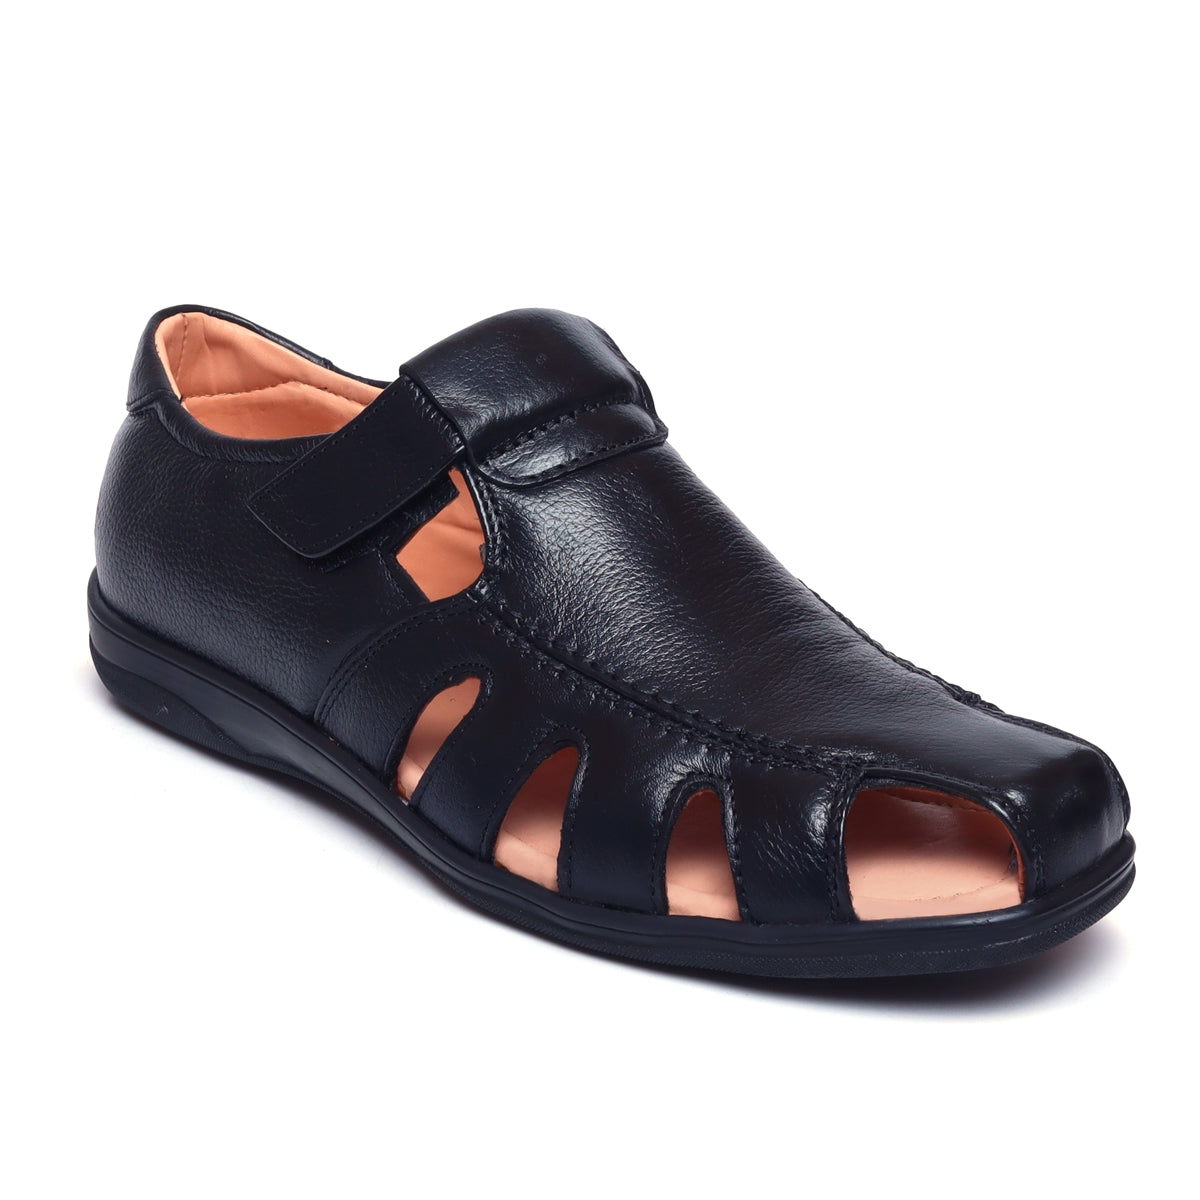 mens black leather sandals